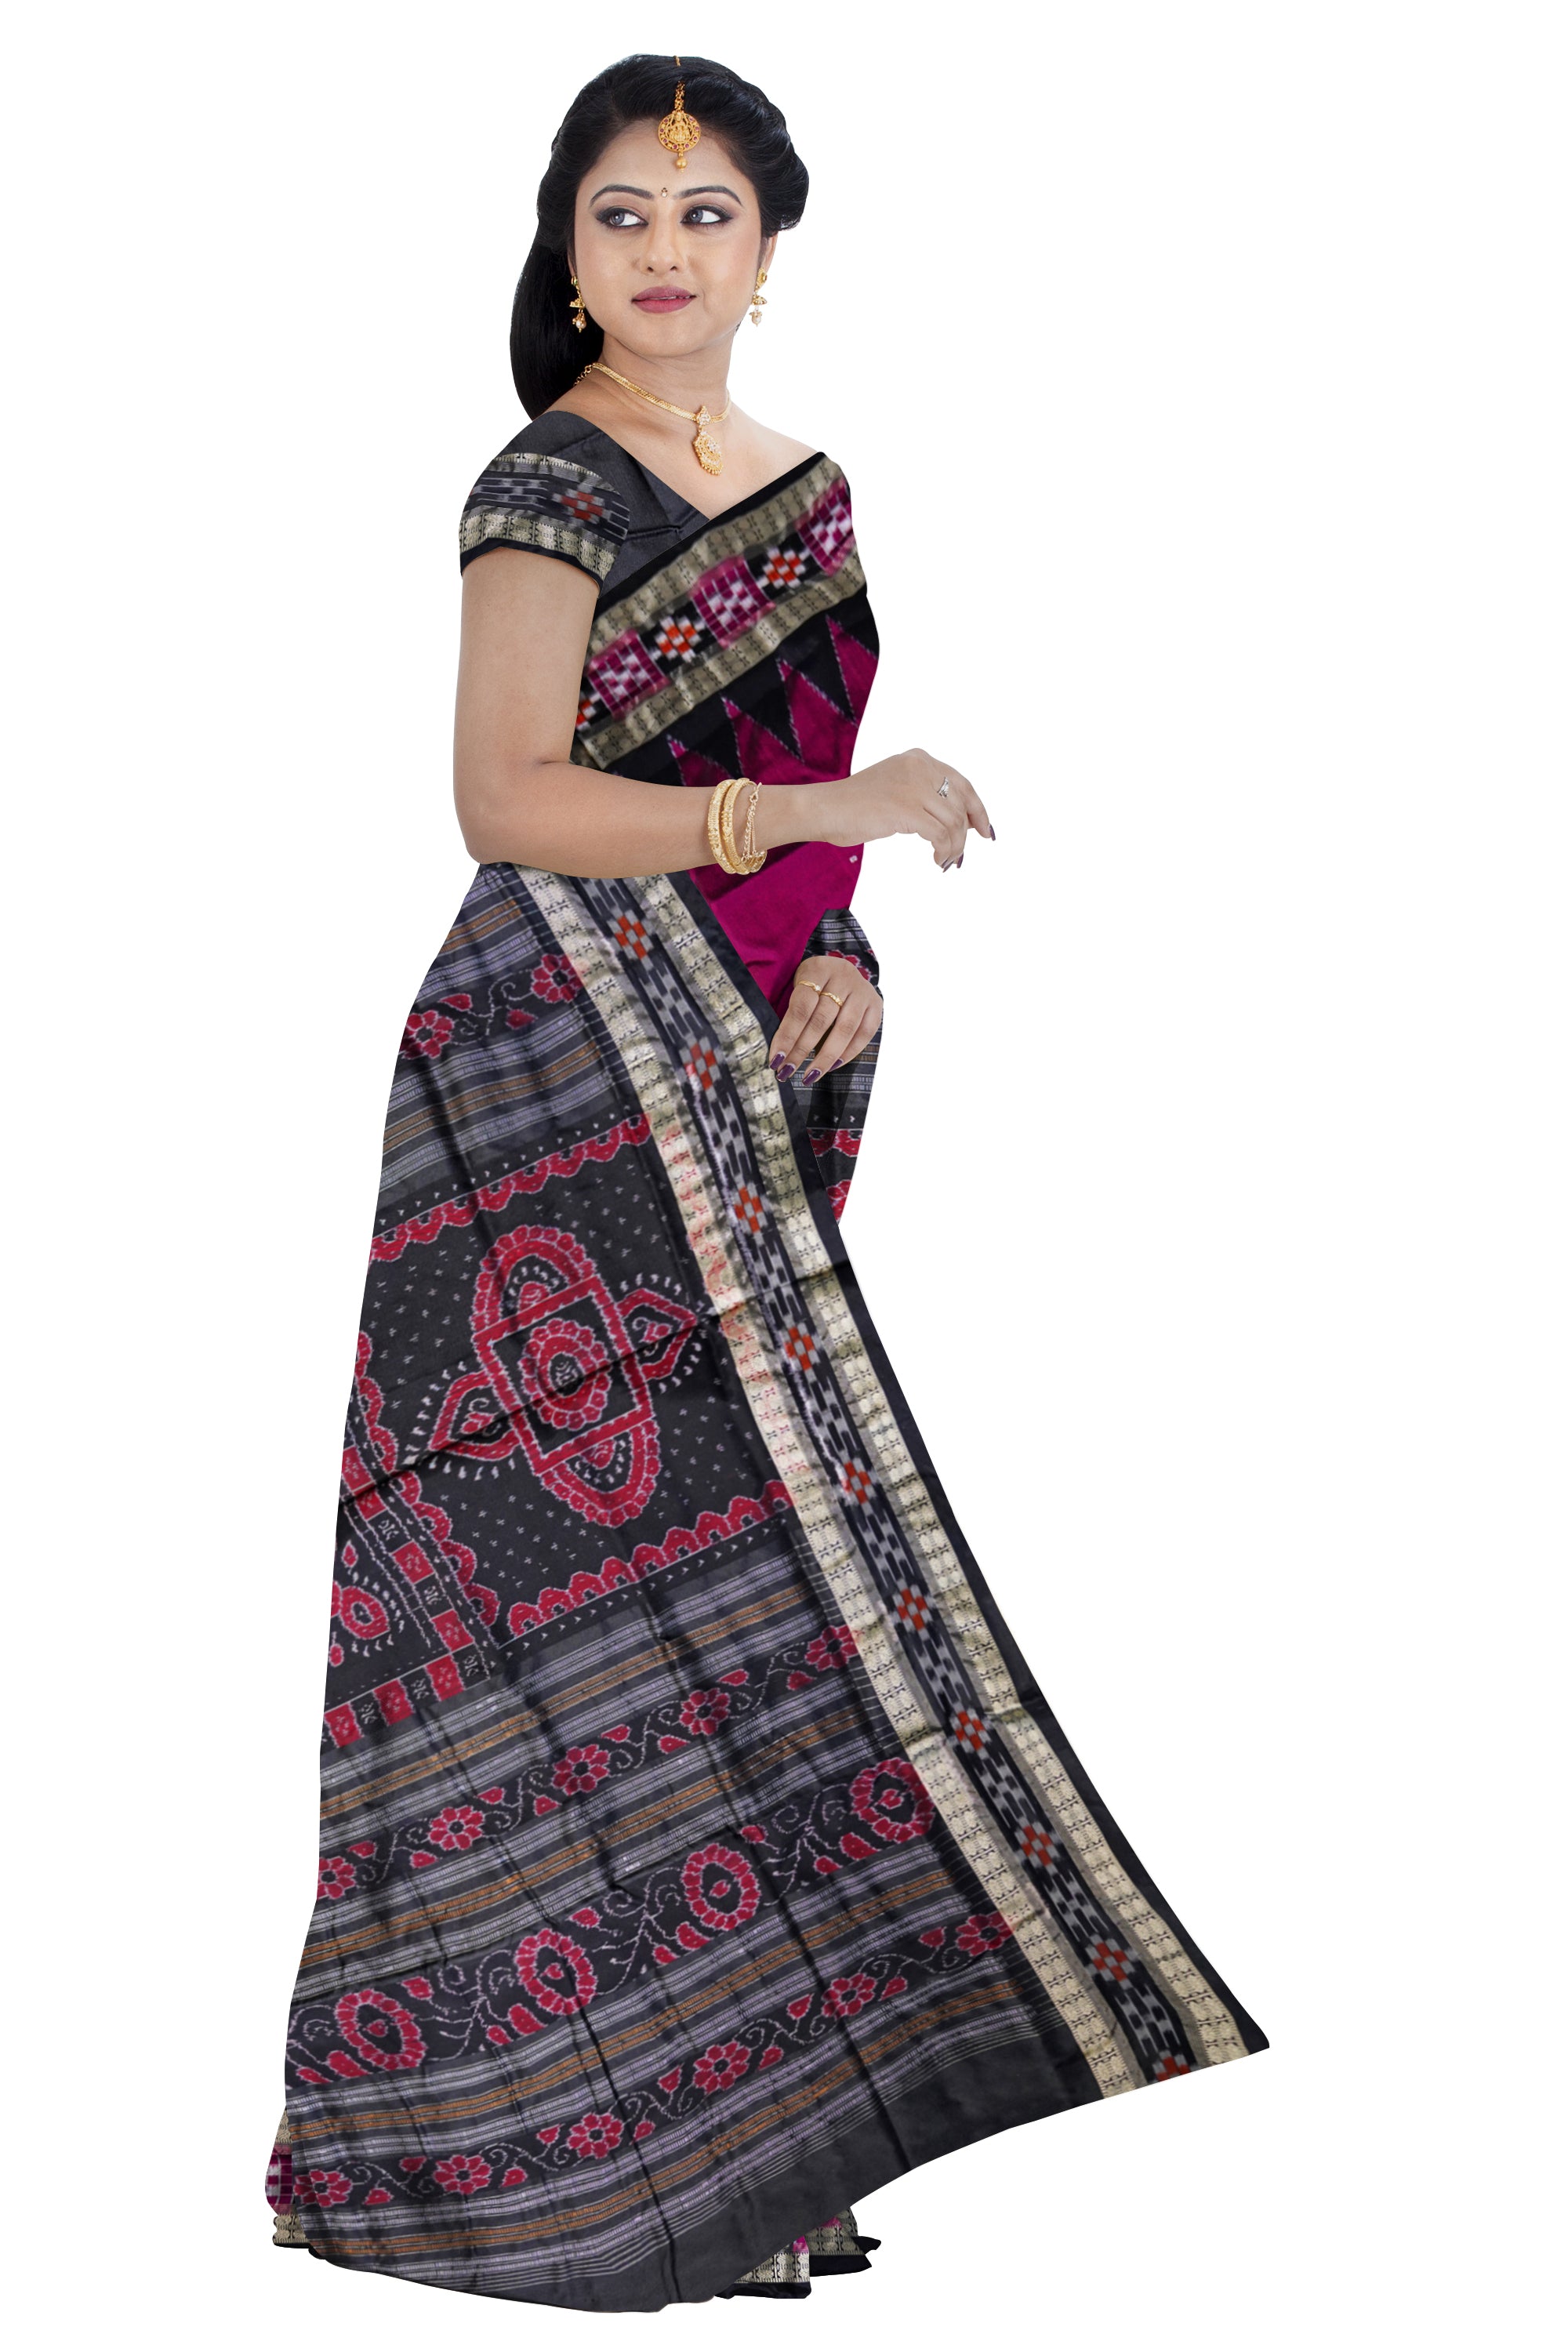 Pink with black pasapali border pata saree. - Koshali Arts & Crafts Enterprise